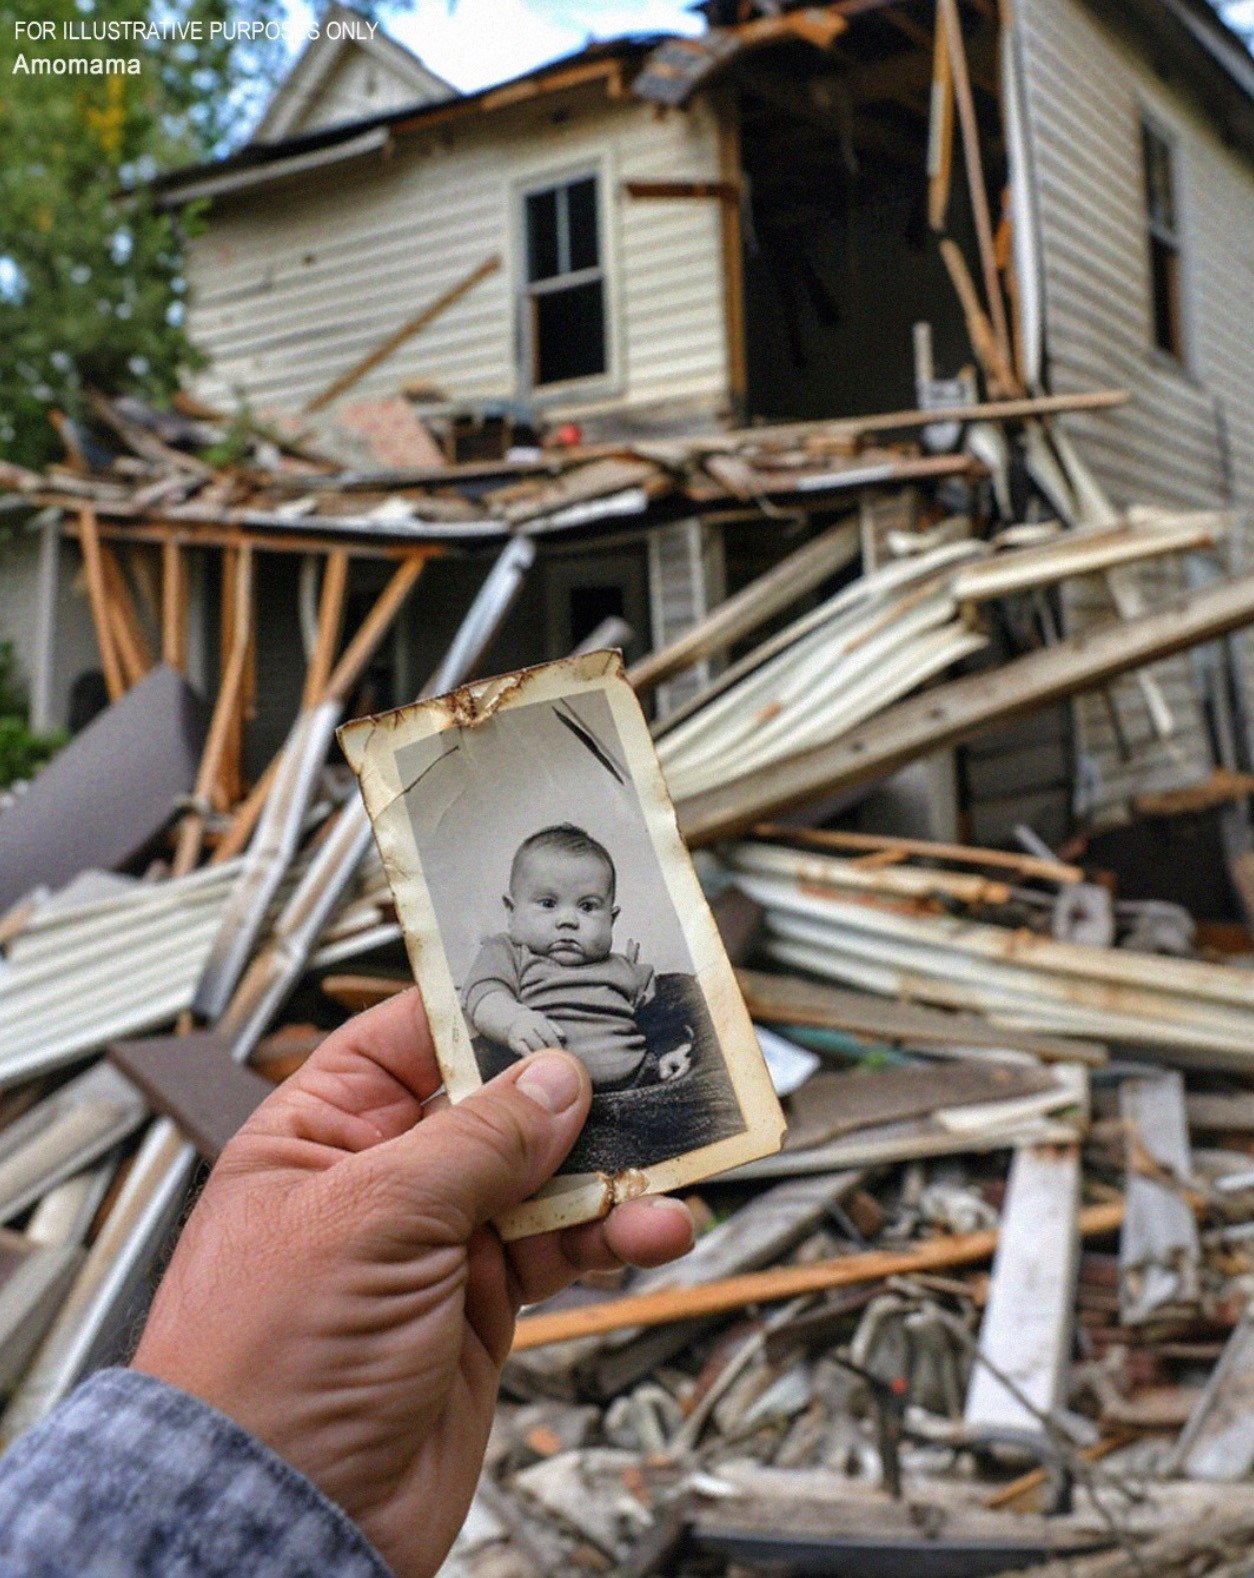 Wealthy Developer Destroys Elderly Man’s Home, Stumbles Upon His Own Childhood Photograph Amidst the Debris